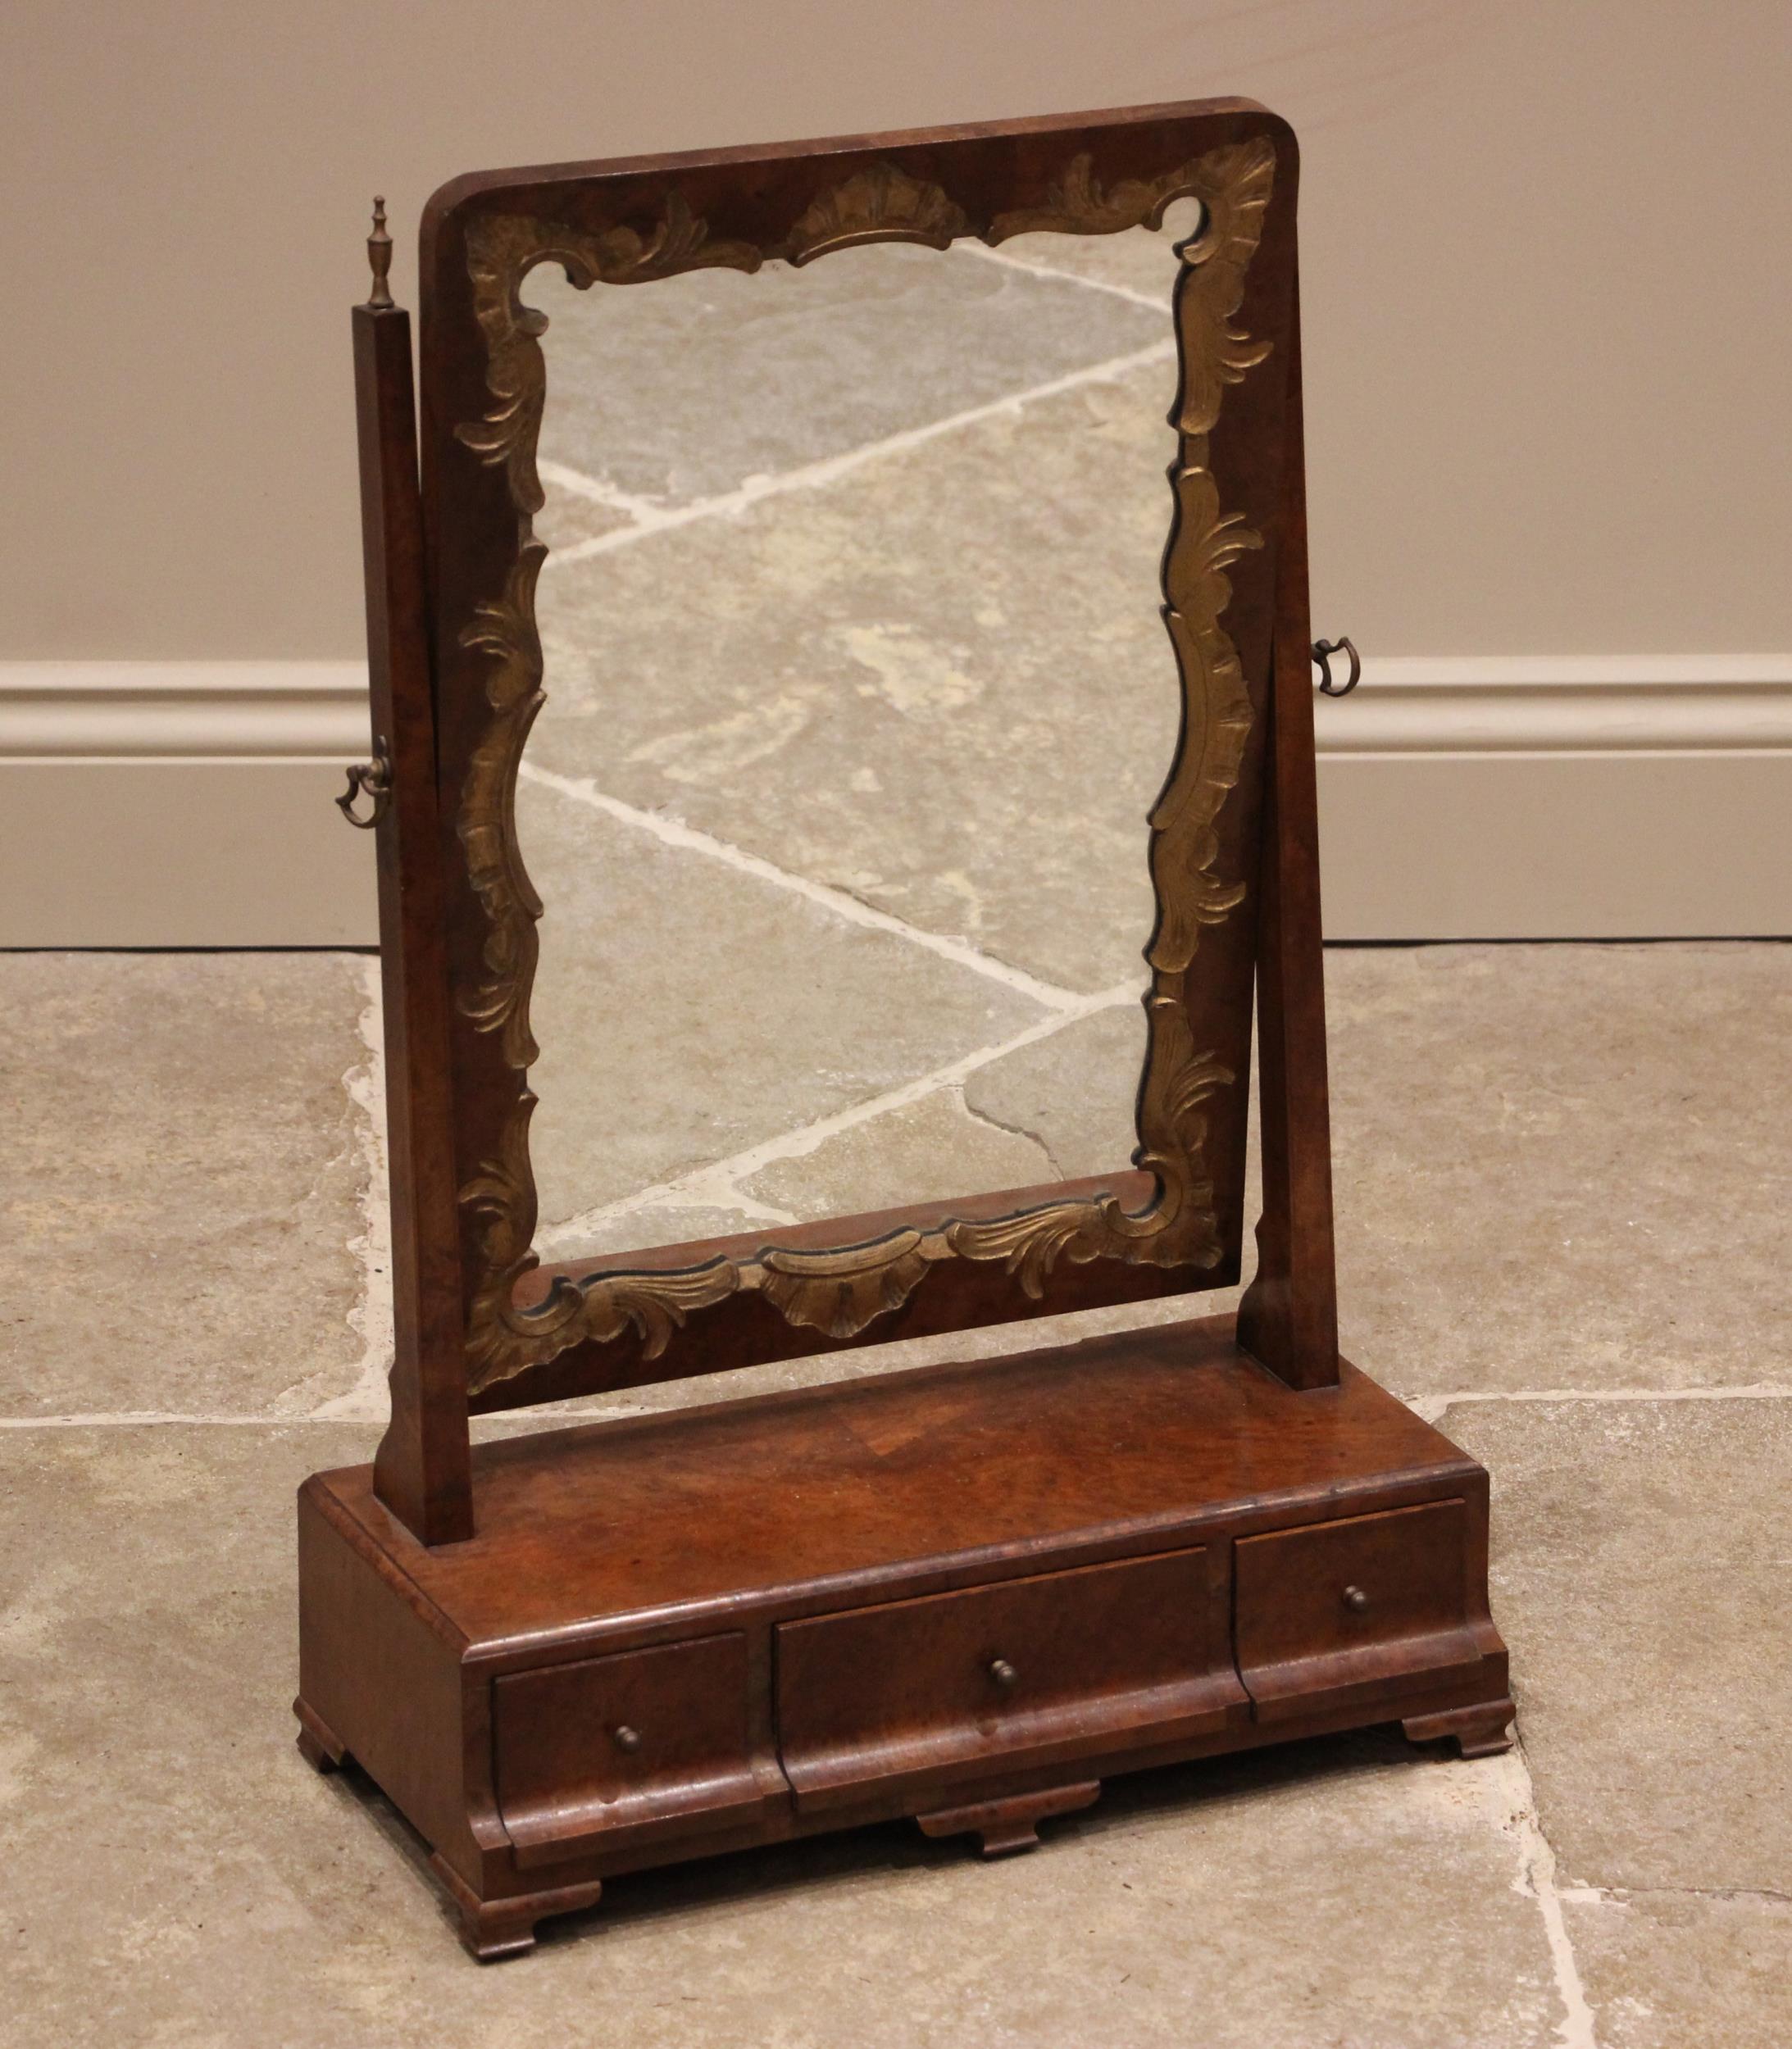 A George I style burr elm veneered dressing table mirror, 20th century, the rectangular mirrored